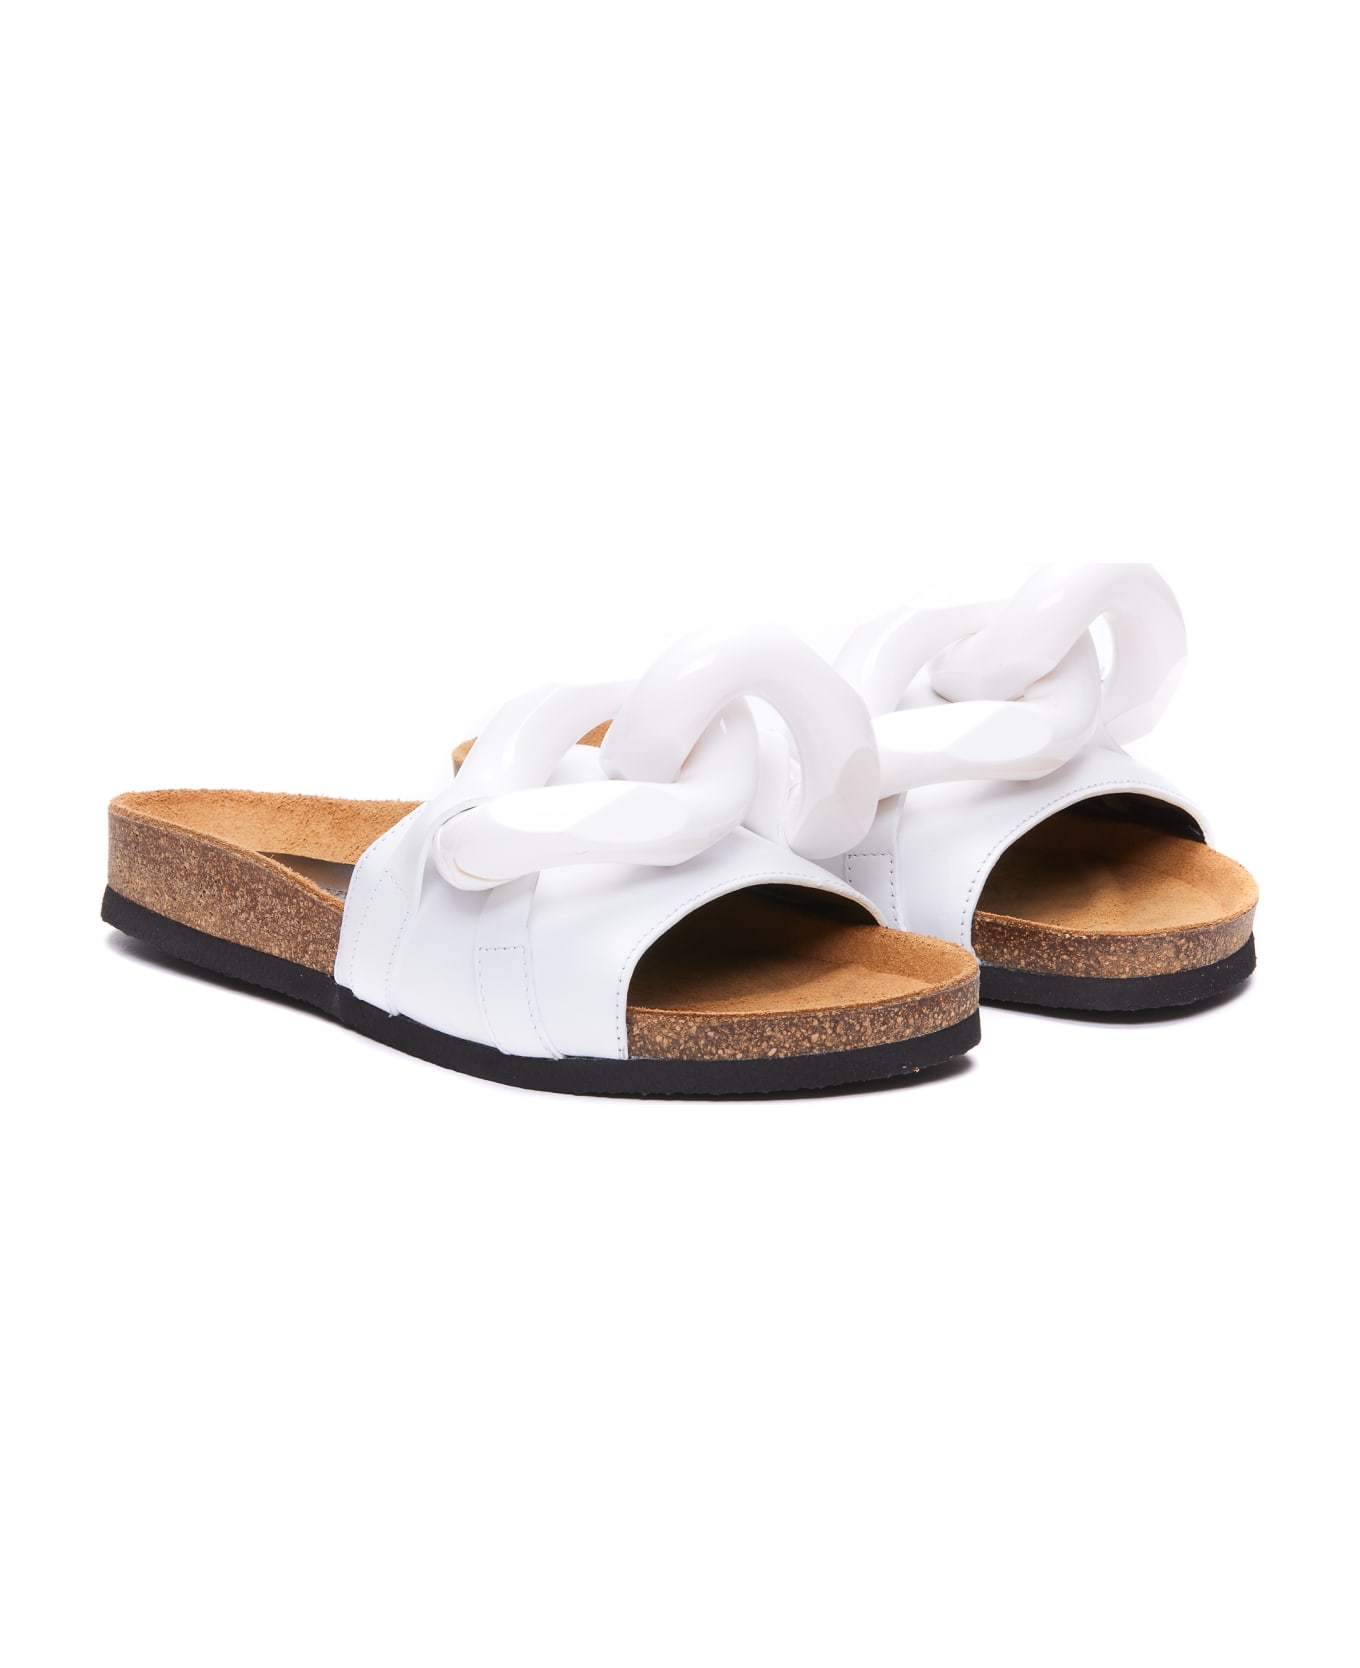 J.W. Anderson Chain Slide Sandals - White